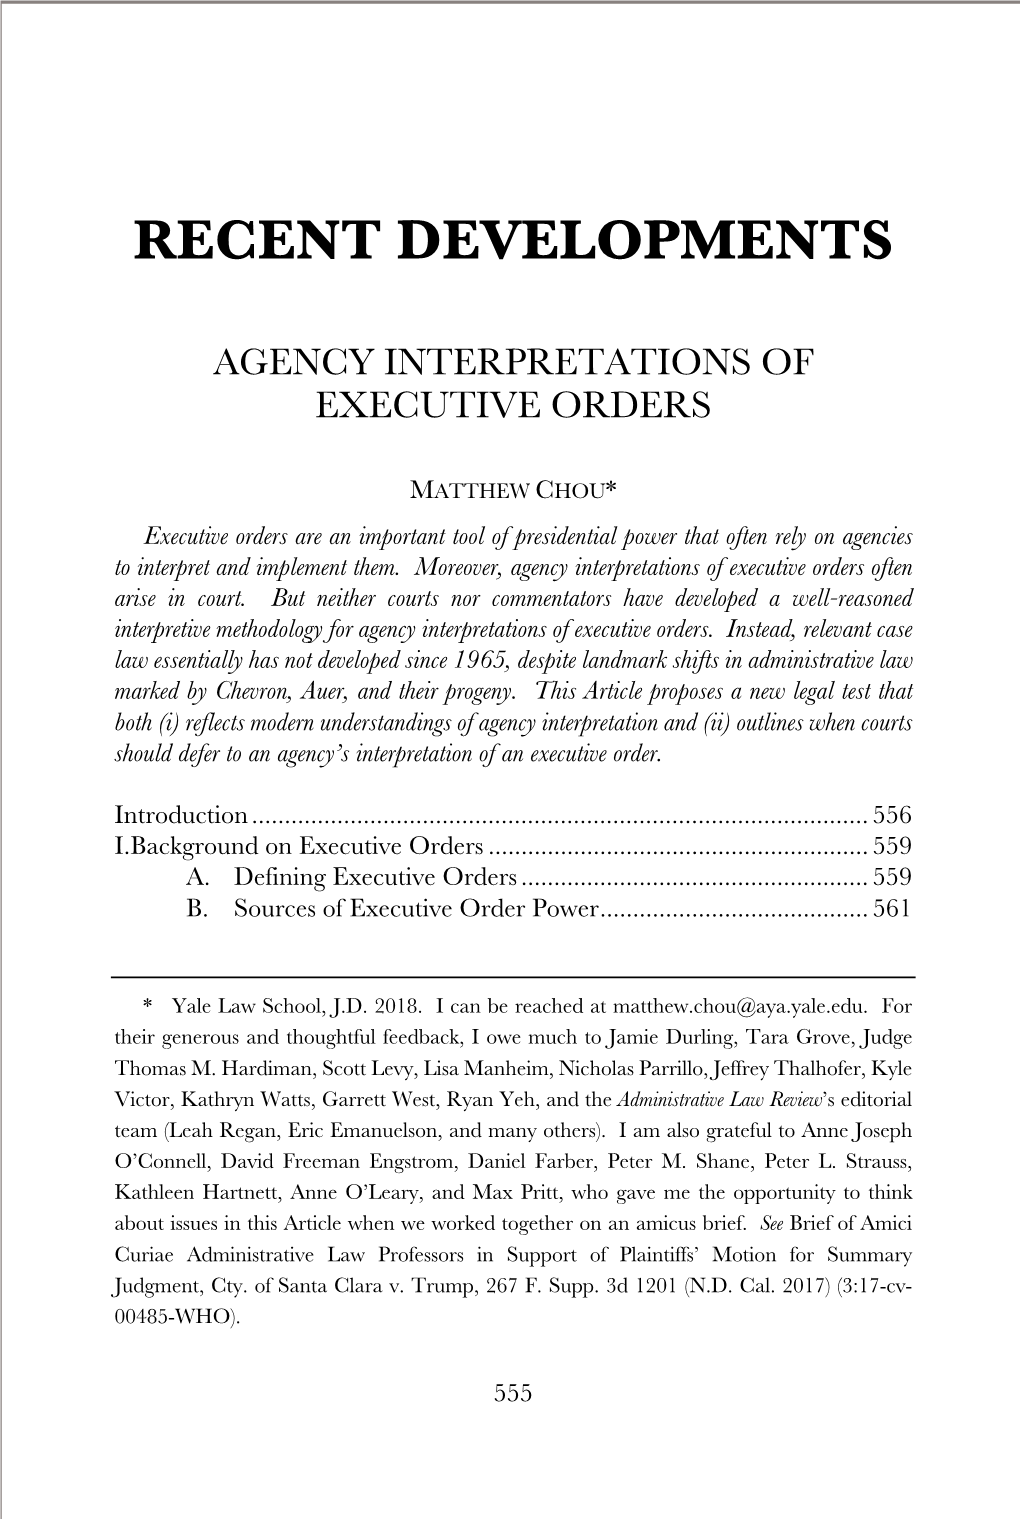 Agency Interpretations of Executive Orders Often Them